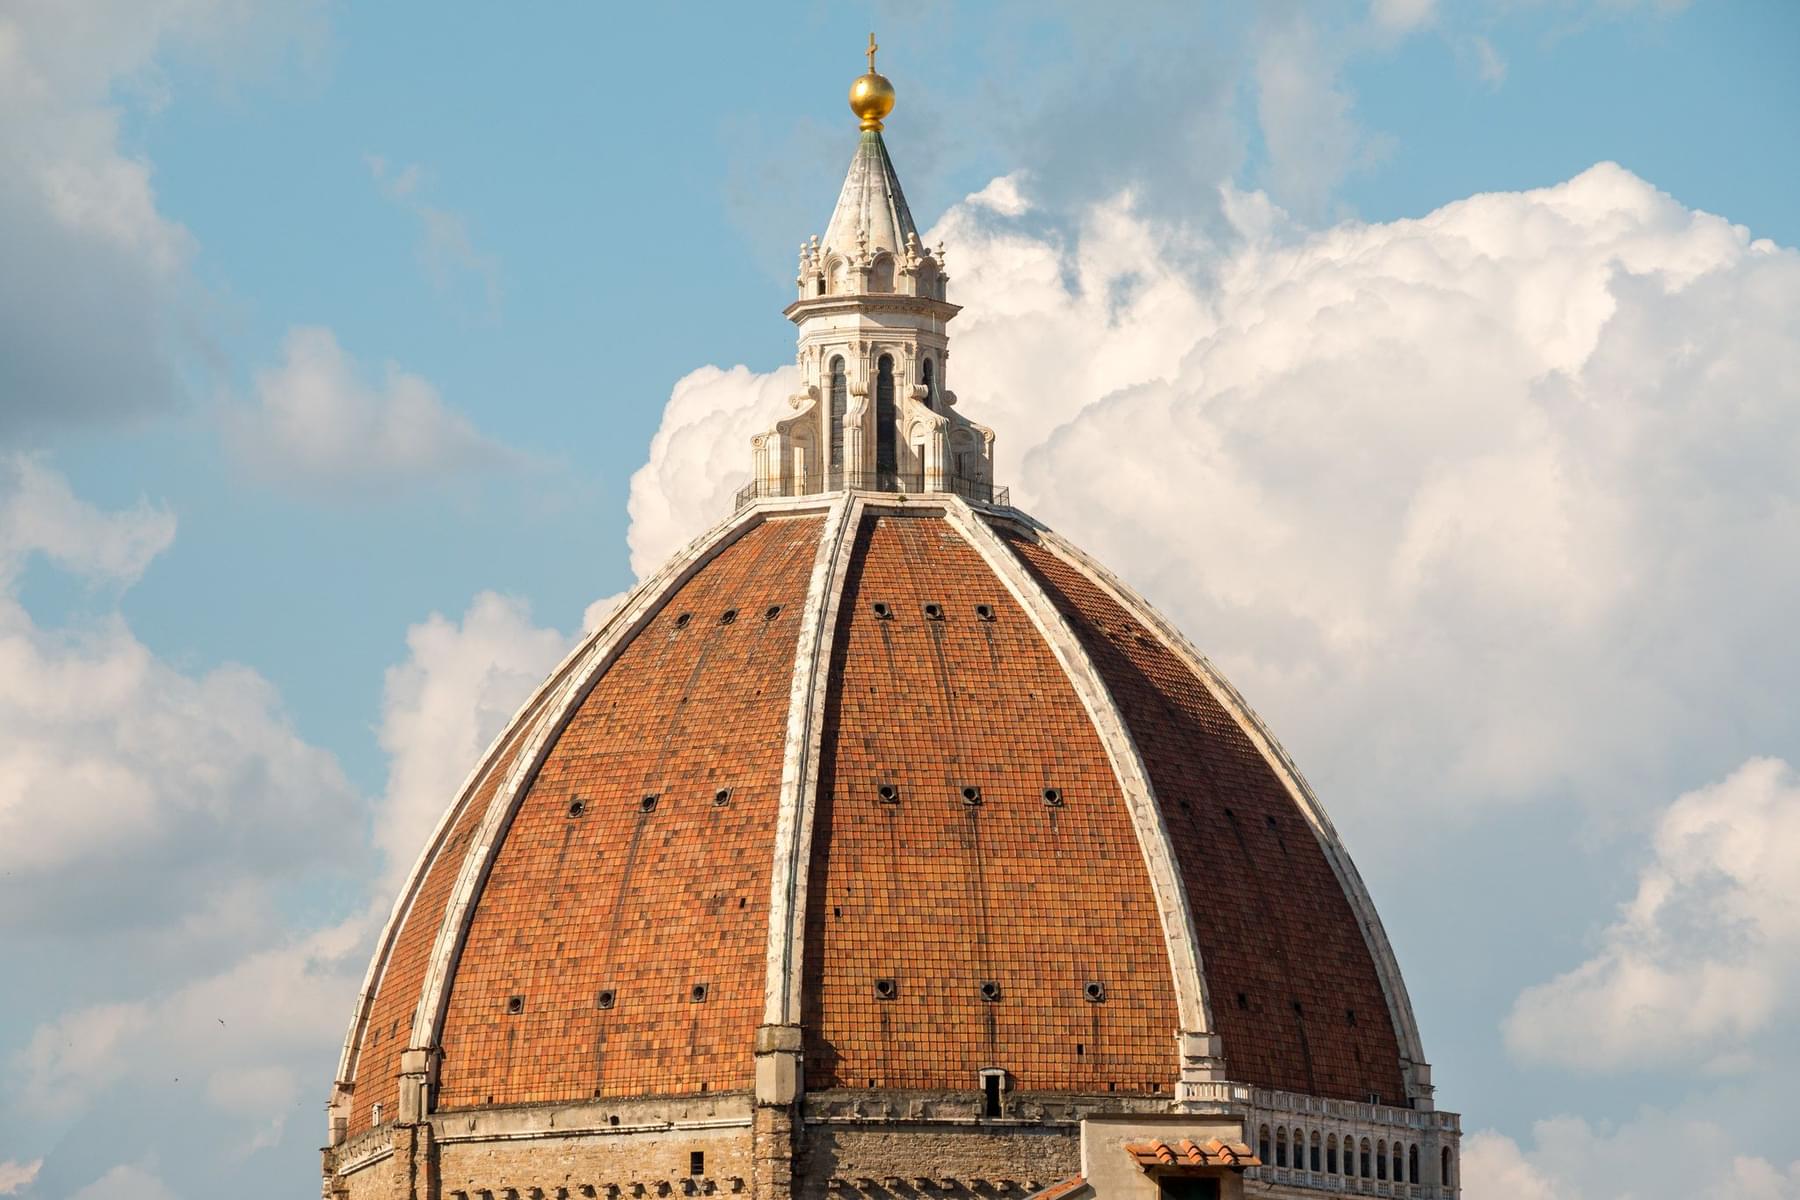 Why Visit Brunelleschi Dome?